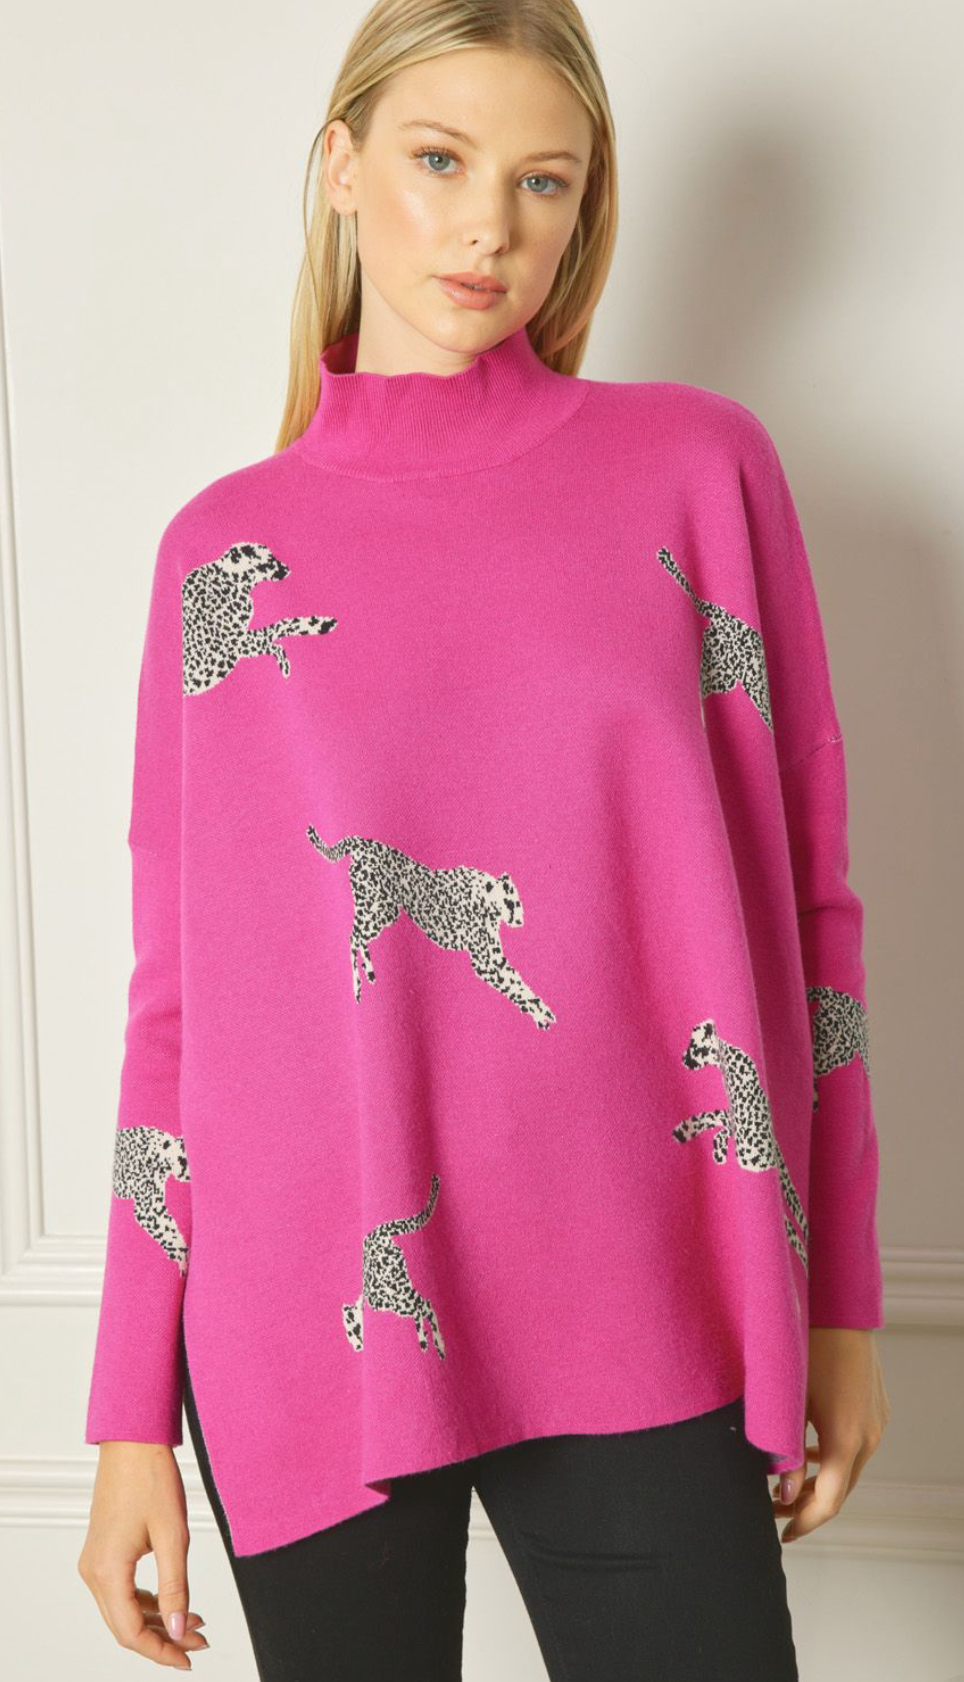 Maelyn Cheetah Sweater